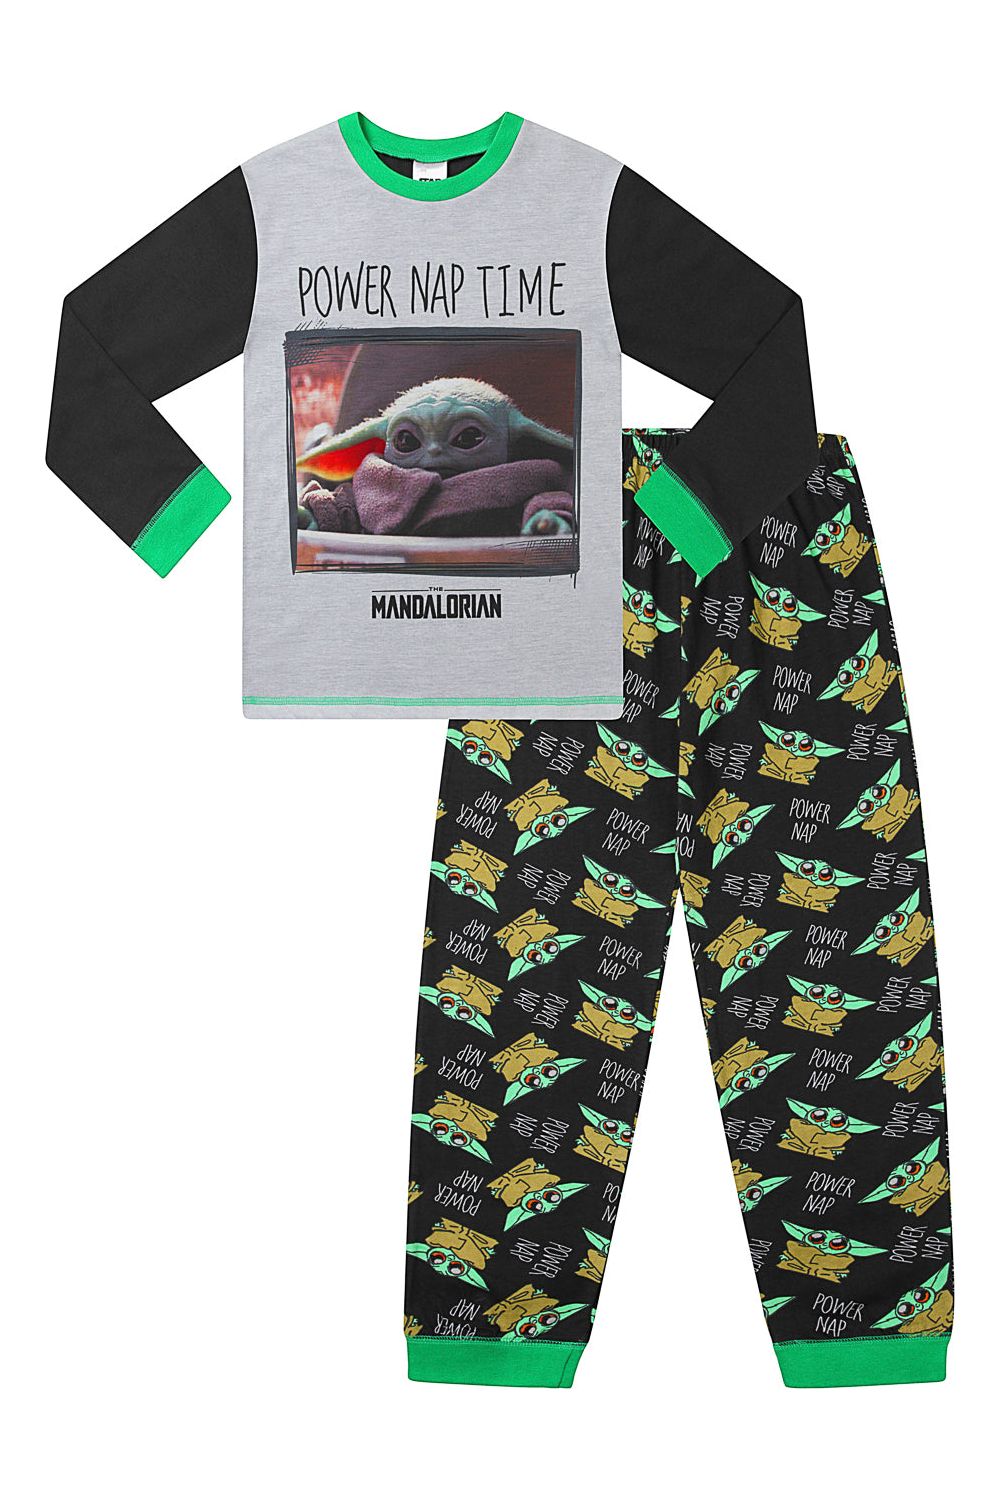 Boys' Star Wars Baby Yoda The Mandalorian Power Nap Pyjama Set - Pyjamas.com